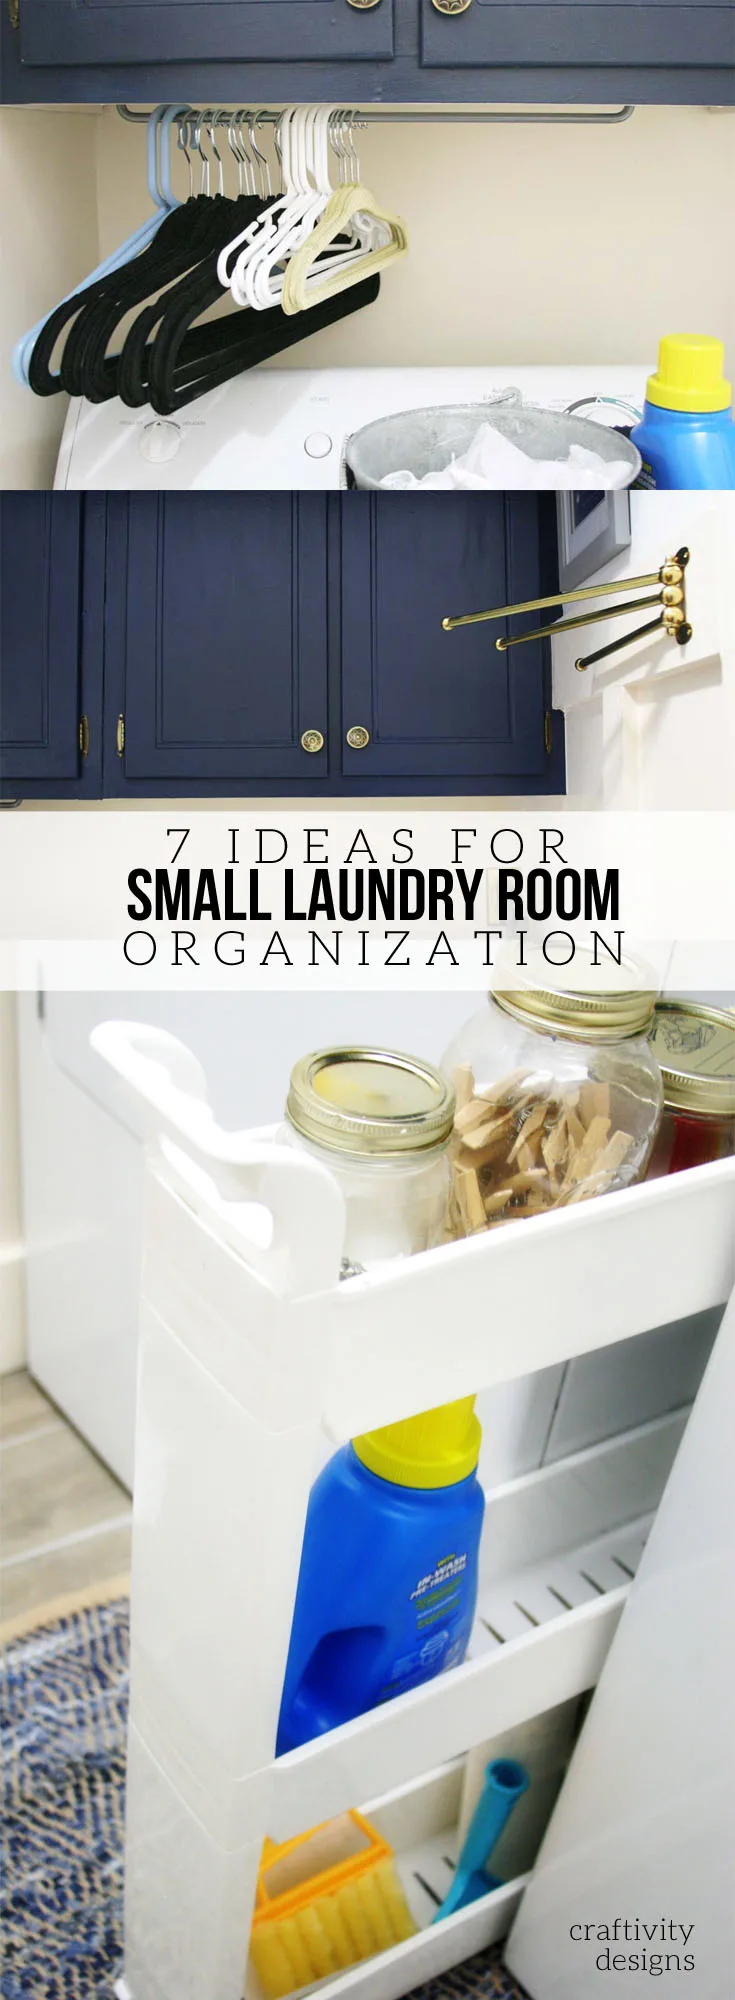 small-laundry-room-organization-craftivity-designs-pin